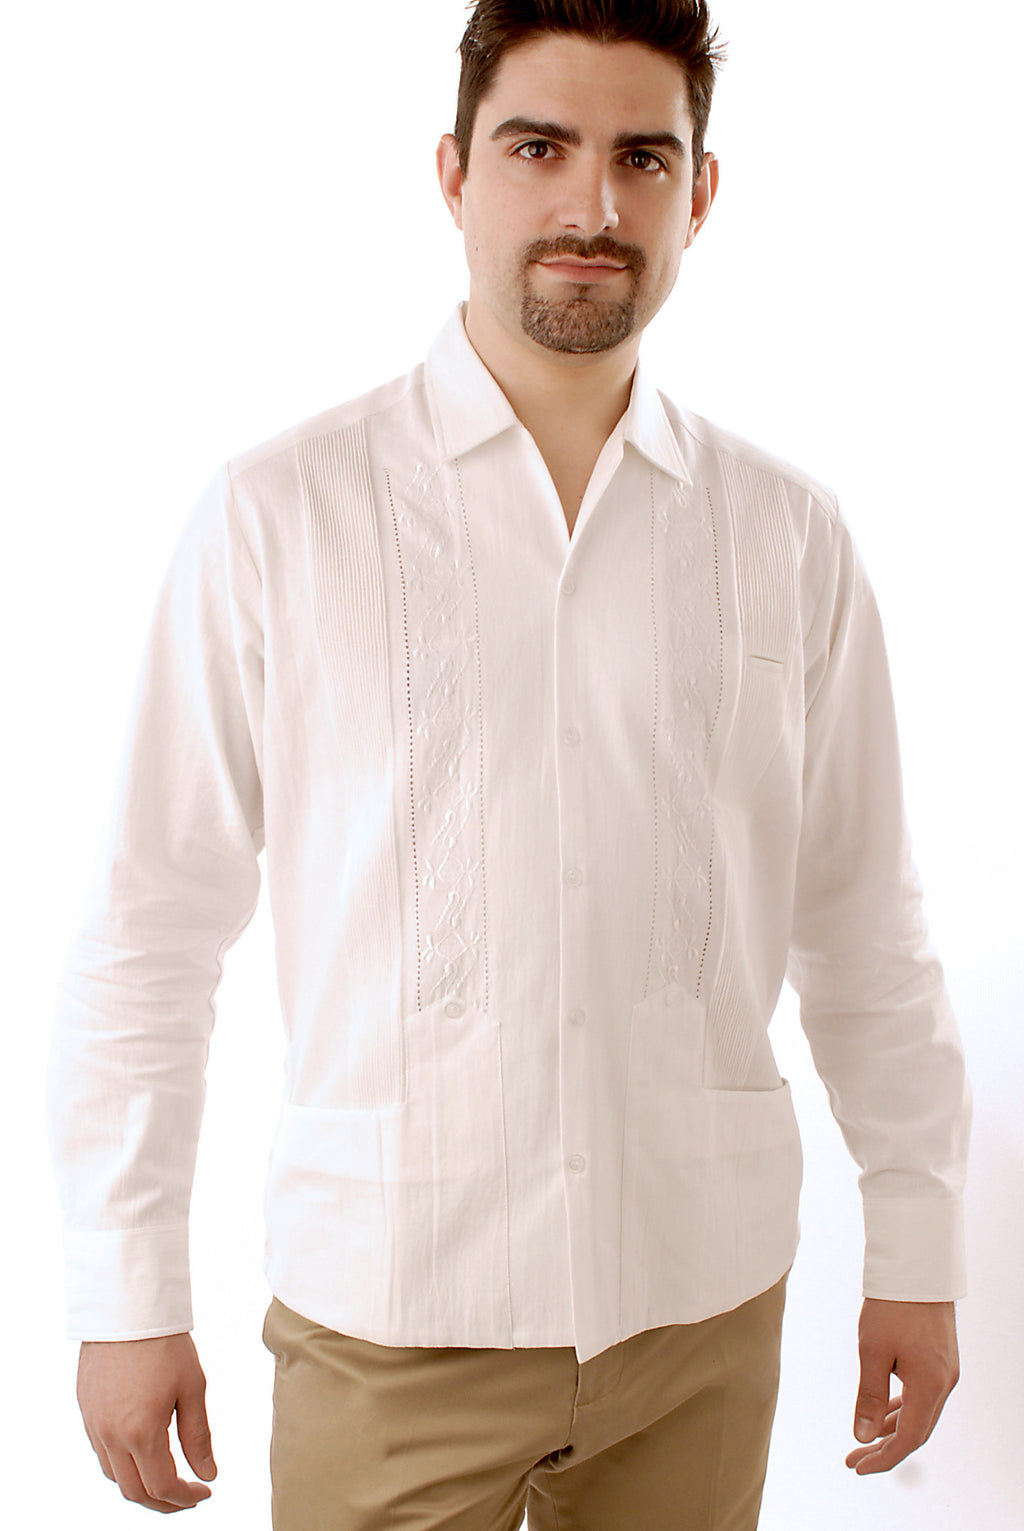 Huitzilli Authentic 100% Cotton Guayabera Shirts from Yucatán in NYC ...